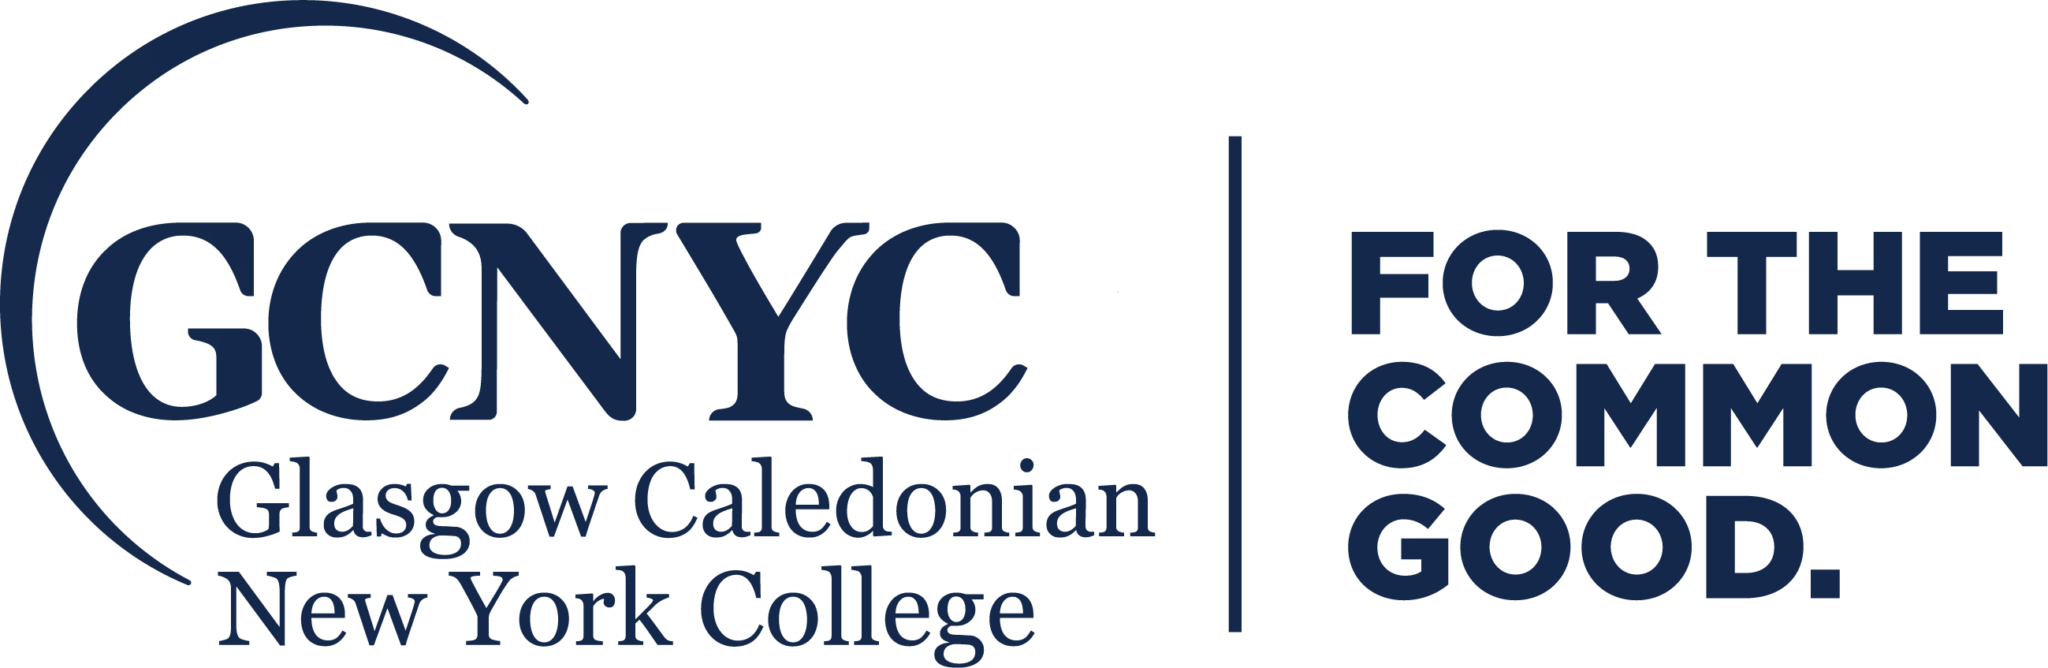 Glasglow Caledonian New York College logo